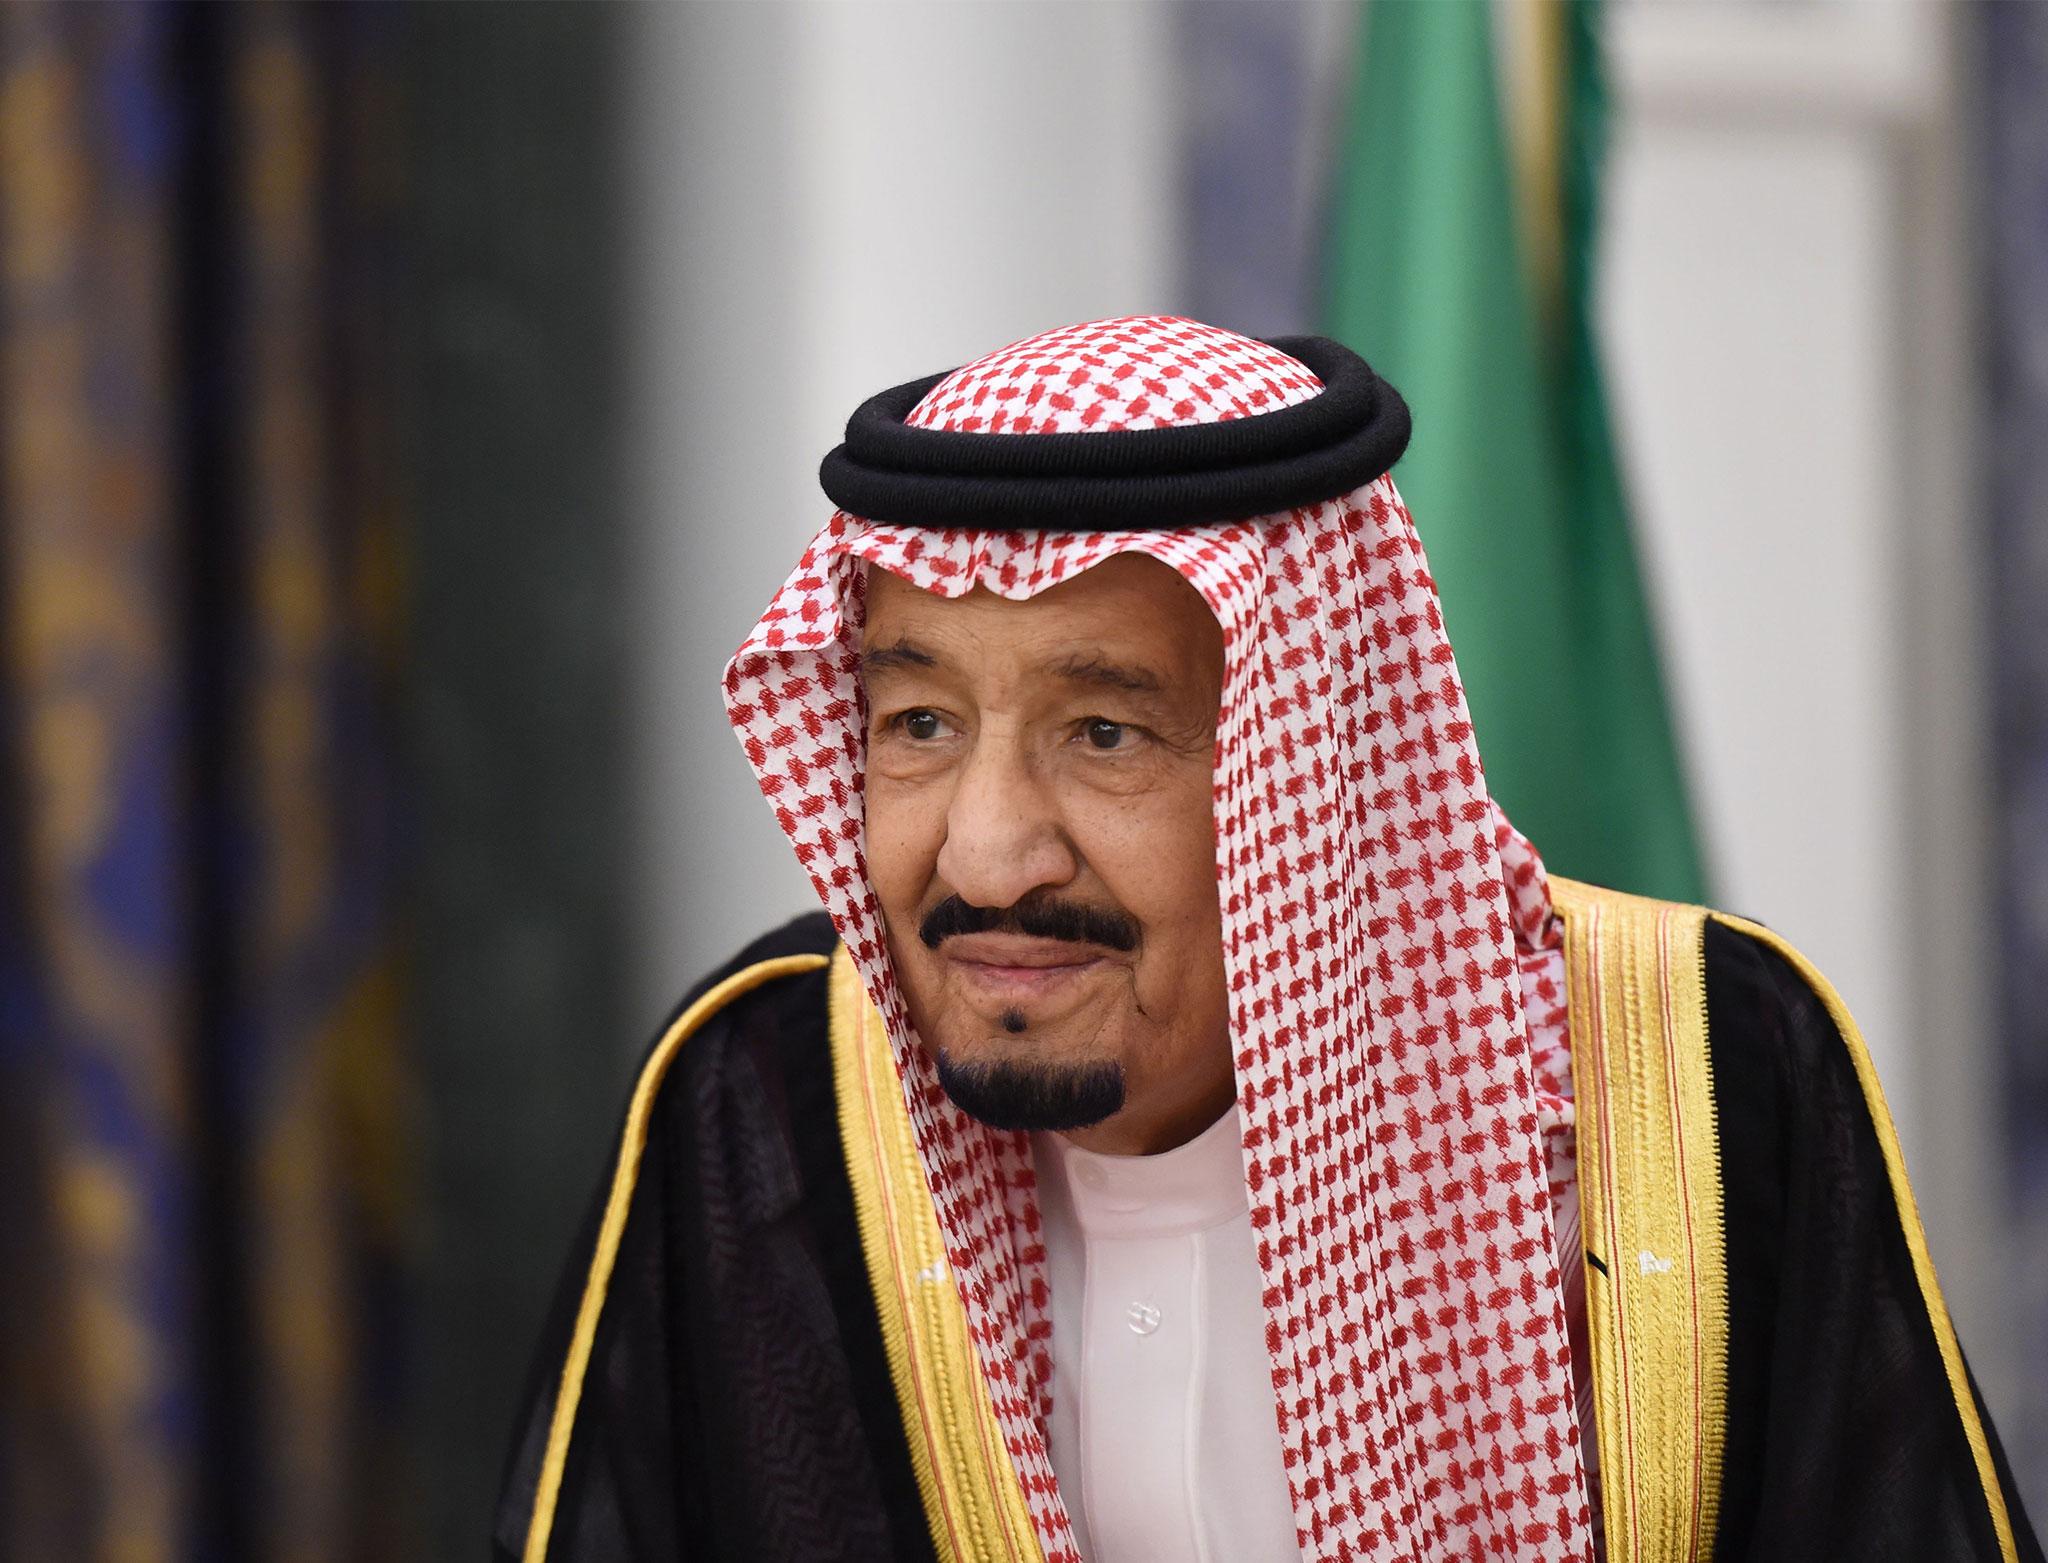 Saudi Arabia's King Salman has 13 adult children